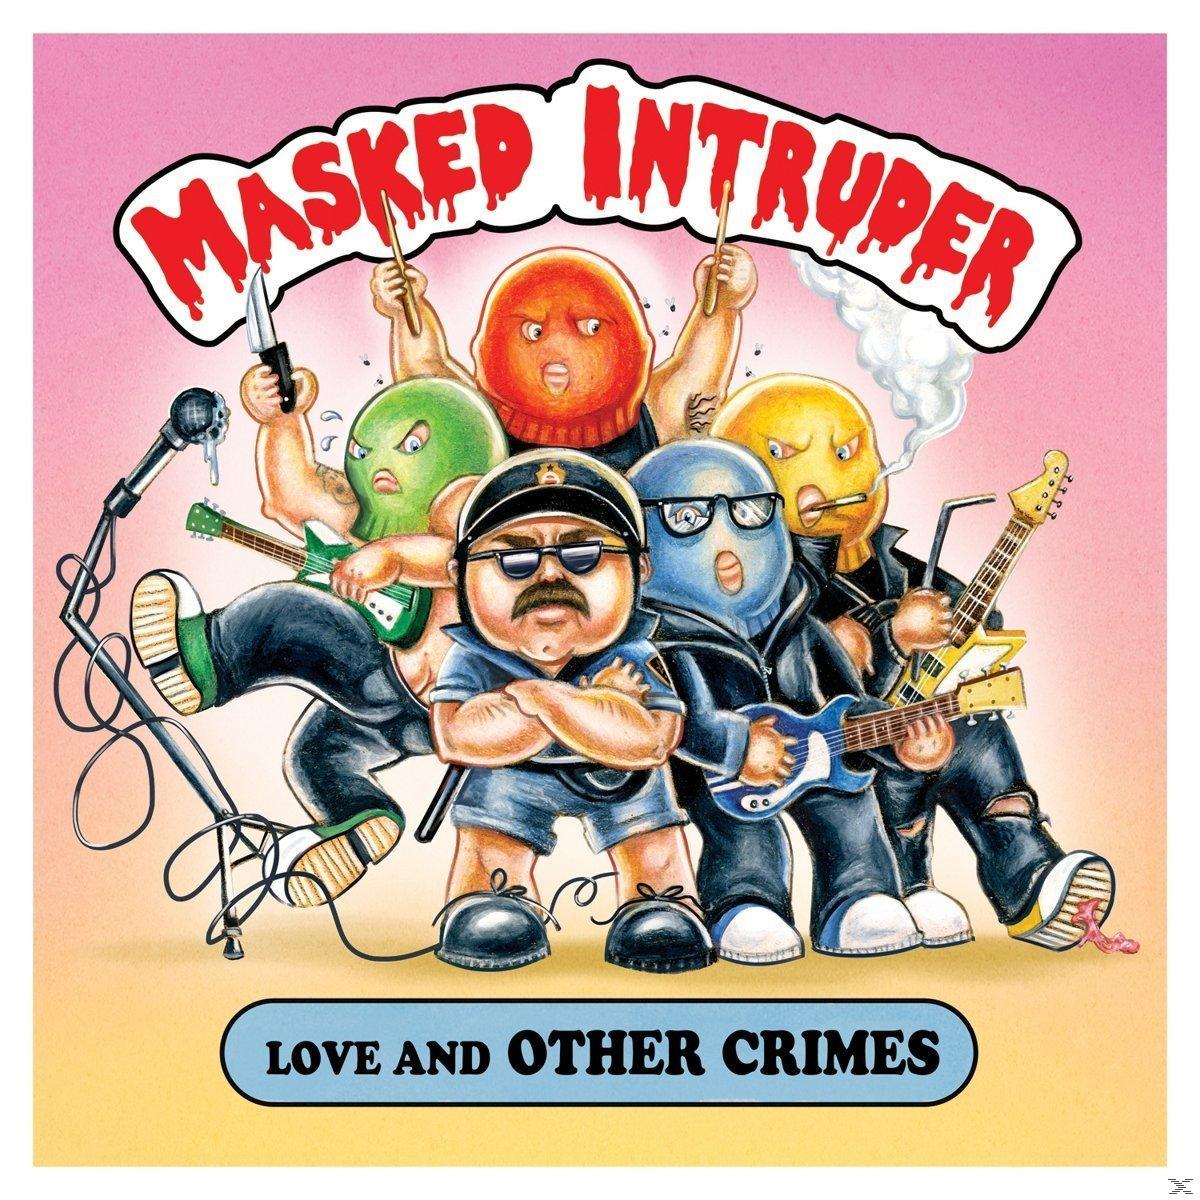 And Love - Intruder The Masked Other (Ltd.Vinyl) (Vinyl) - Crimes